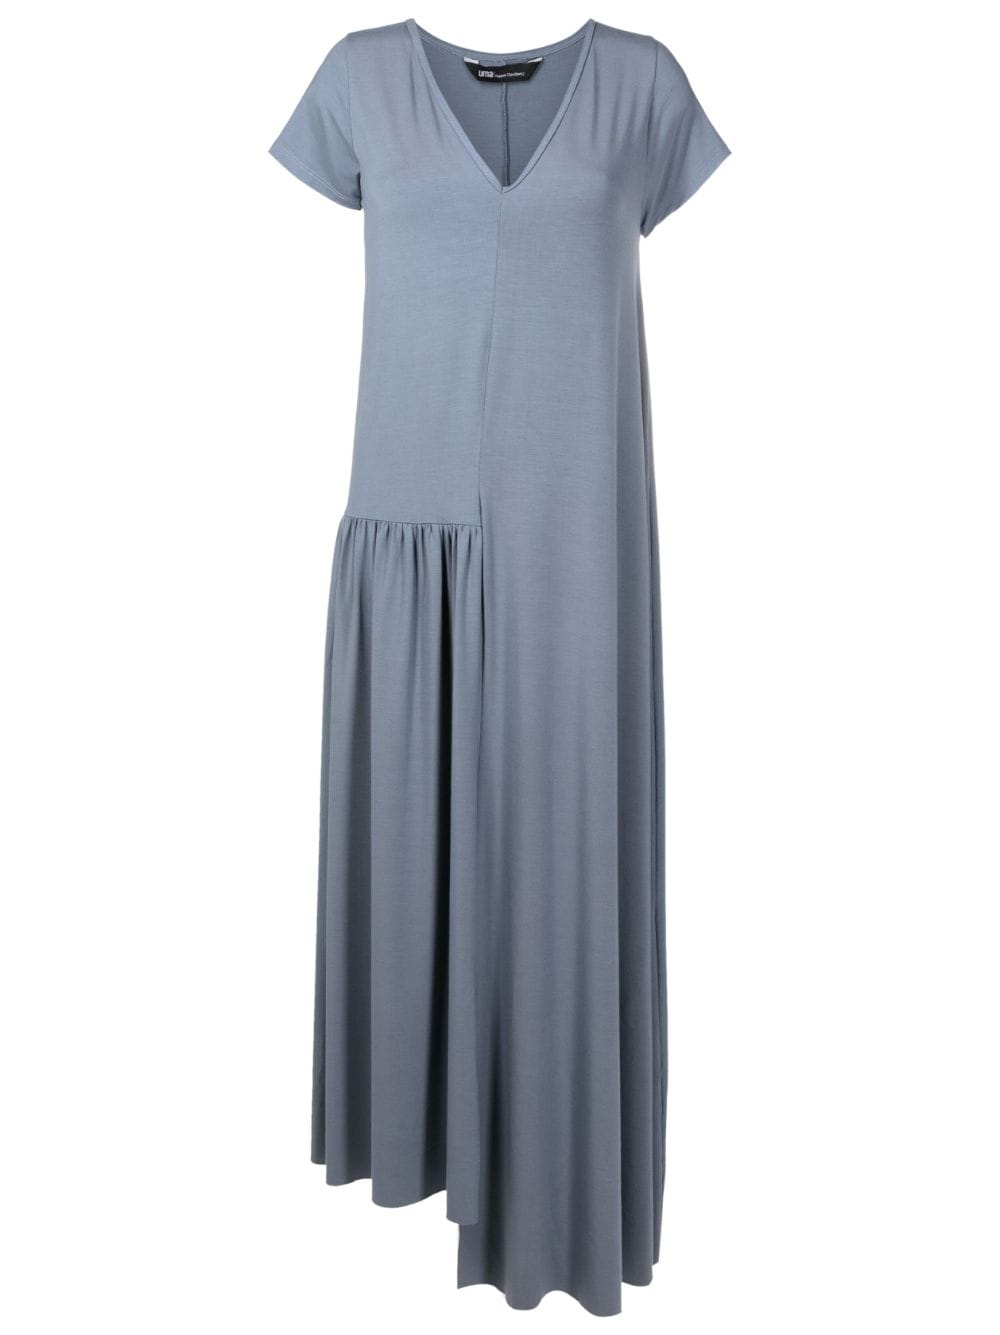 Uma | Raquel Davidowicz Asymmetrisches Kleid mit V-Ausschnitt - Grau von Uma | Raquel Davidowicz